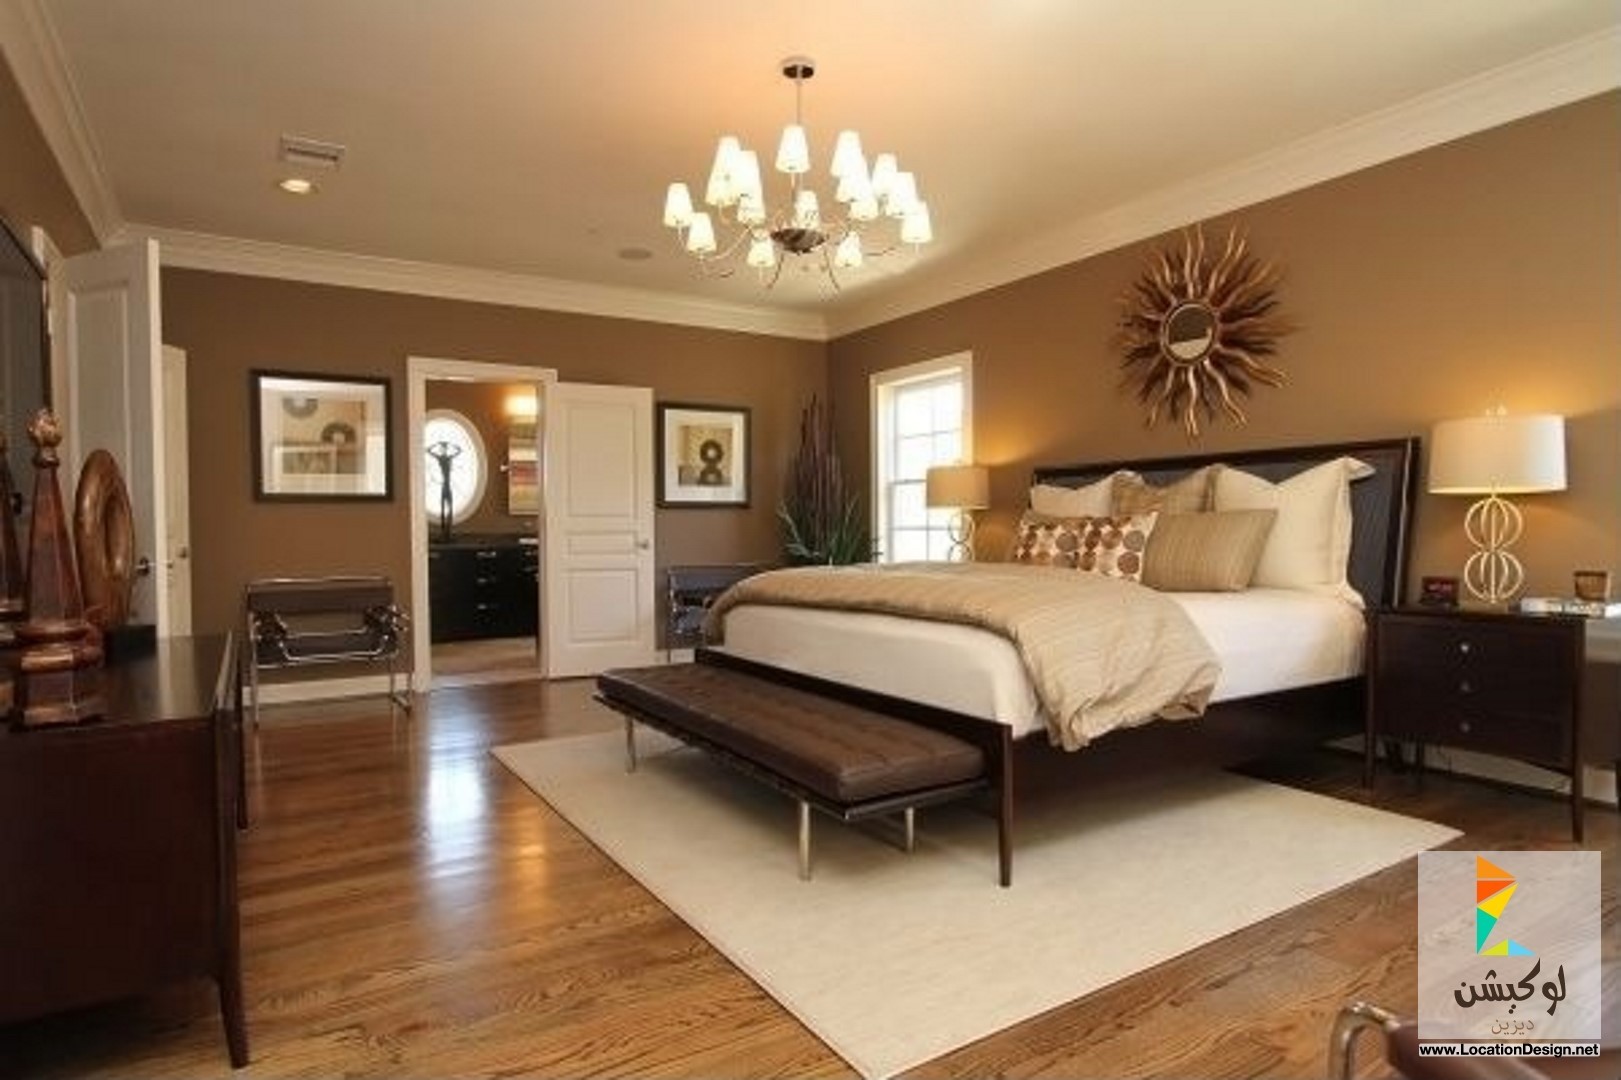 Brown bedroom furniture 1